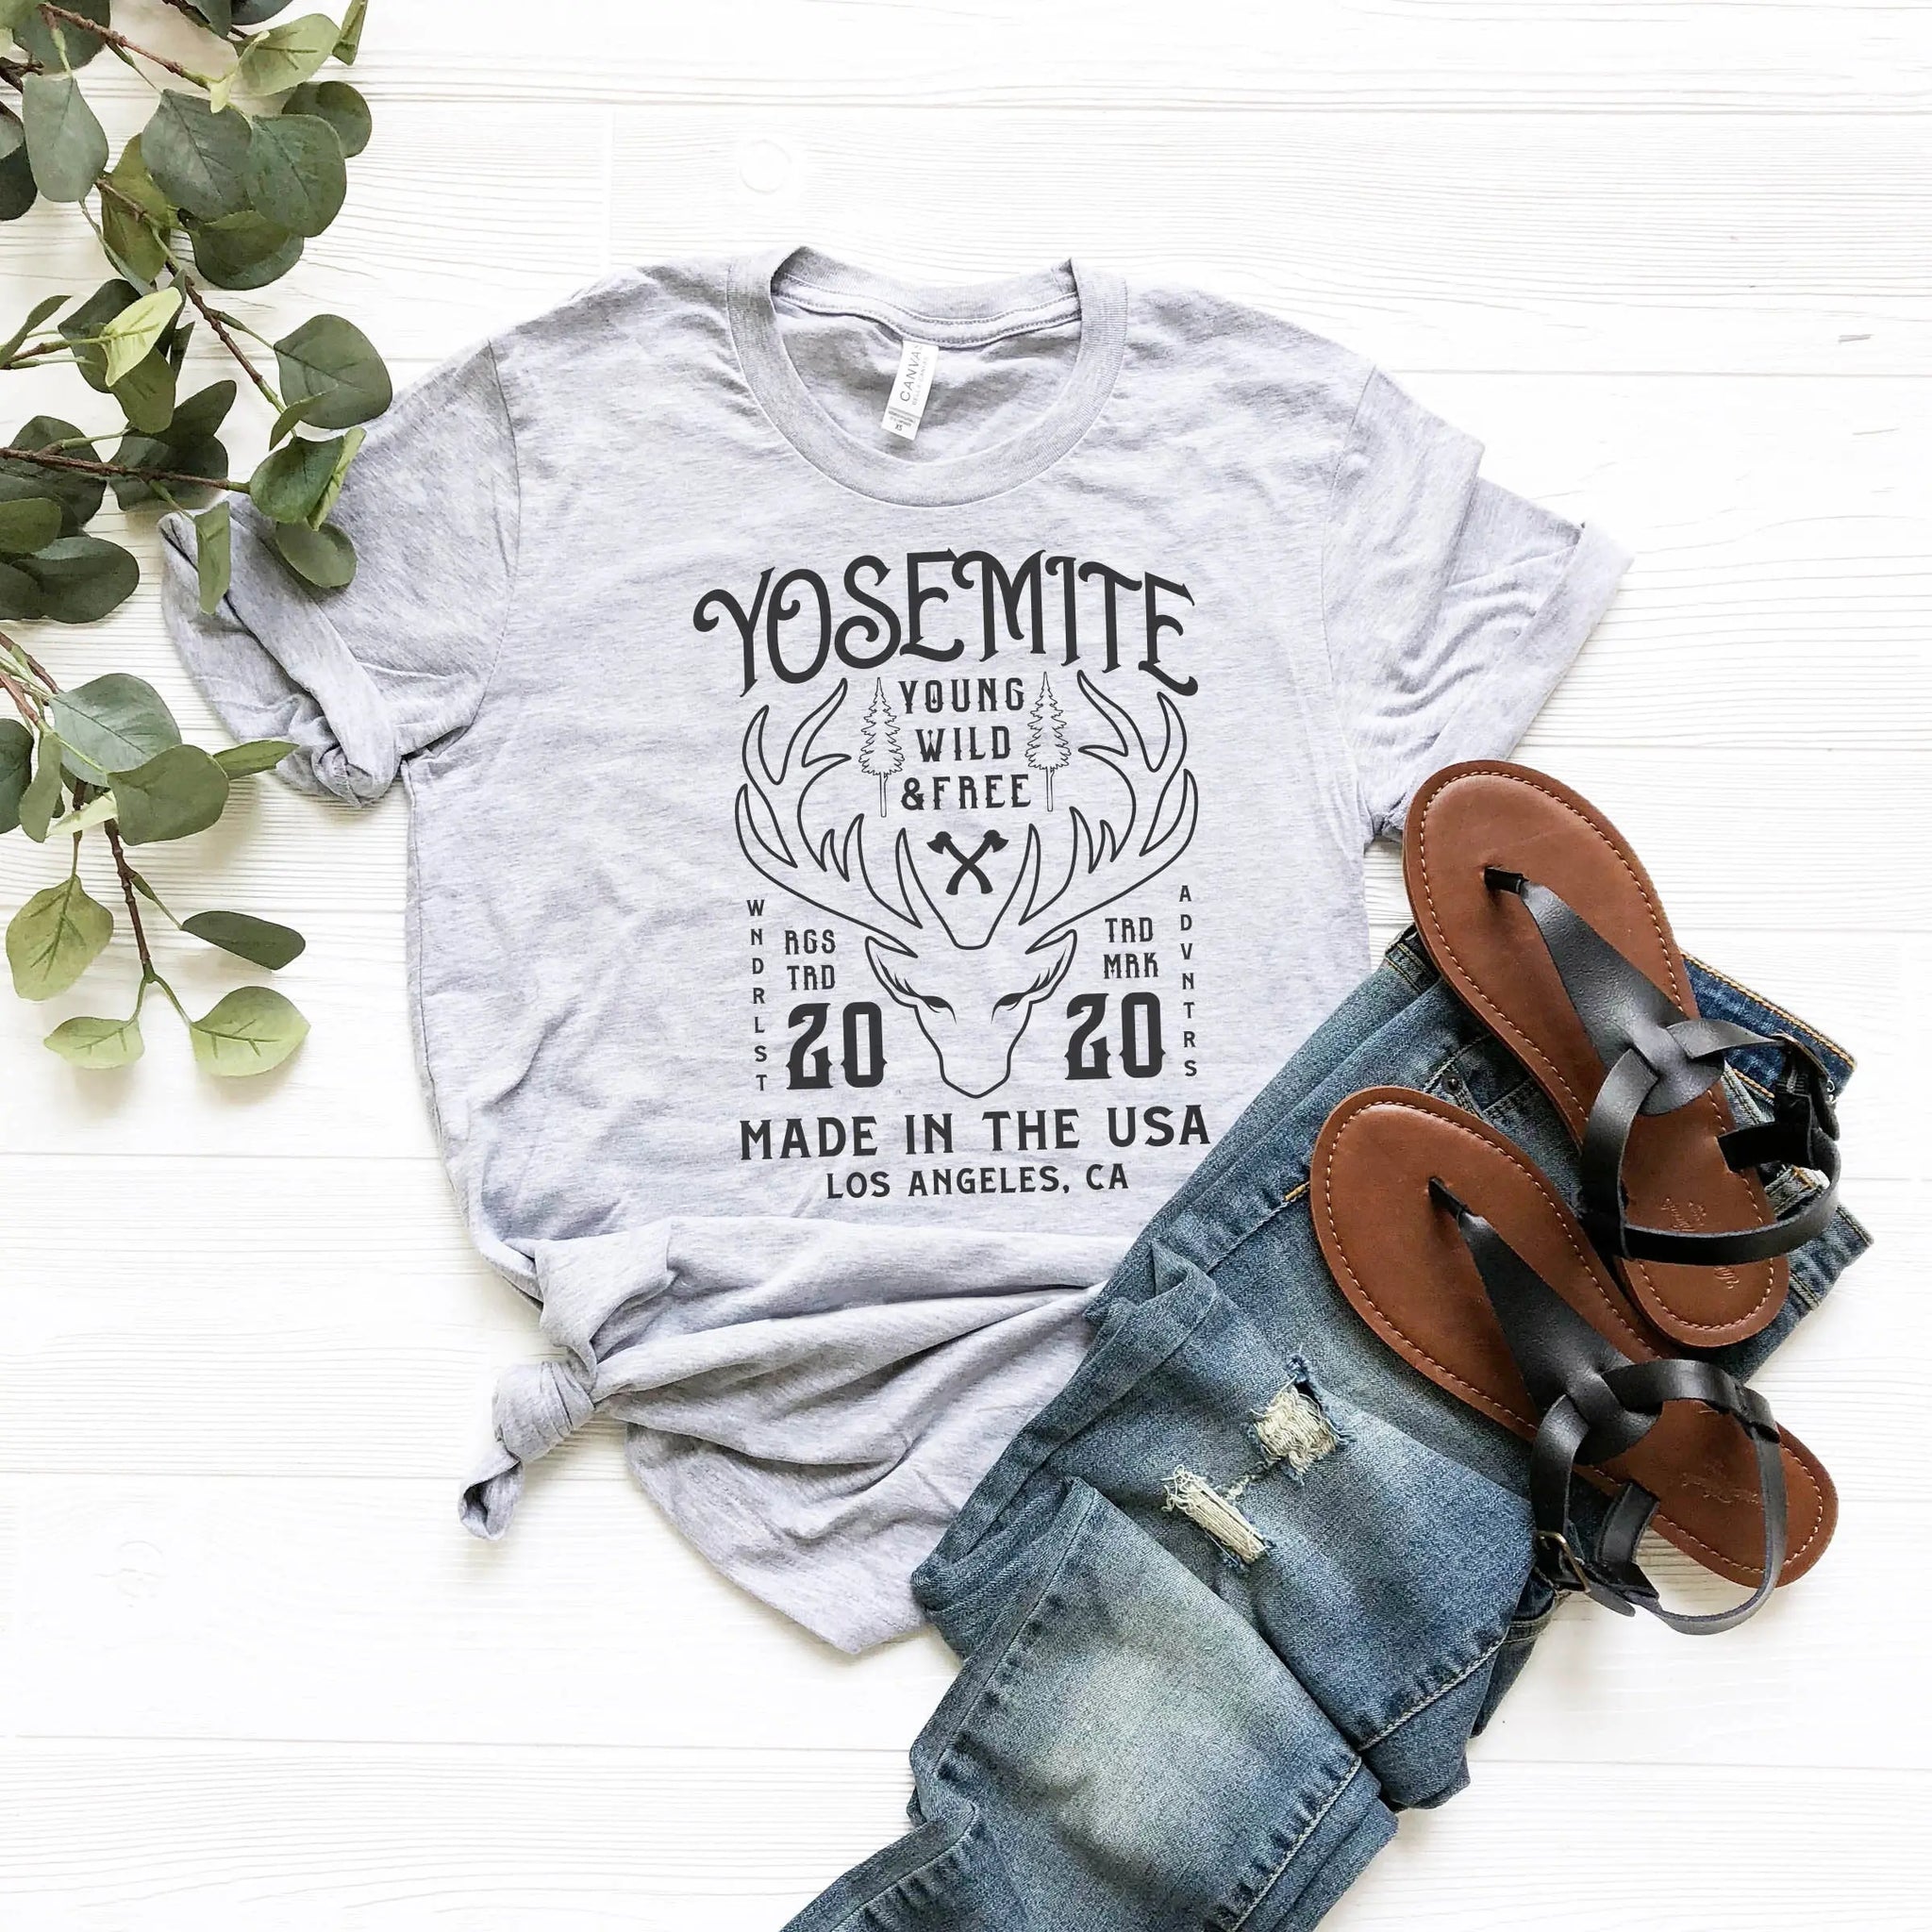 Yosemite Shirt, Mountain Shirt, Vacation Tshirt, Camping Shirt, Retro Adventure Shirt,  Hiking Shirt, Travel Shirt, Outdoor Shirt - Fastdeliverytees.com